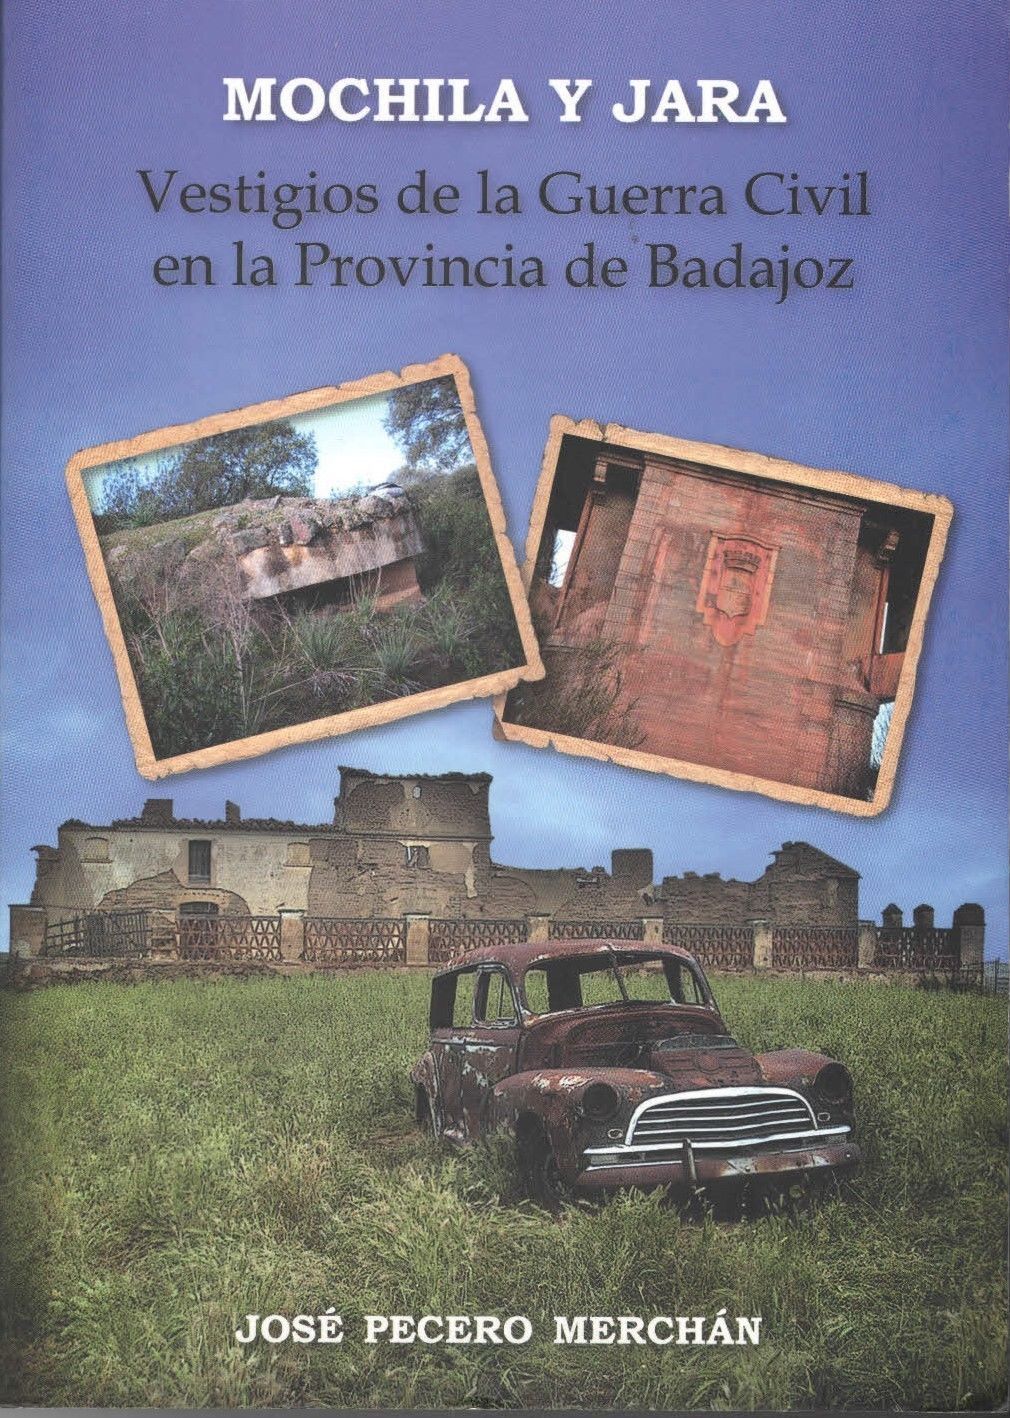 MOCHILA Y JARA, Vestigios de la Guerra Civil en la Provincia de Badajoz.